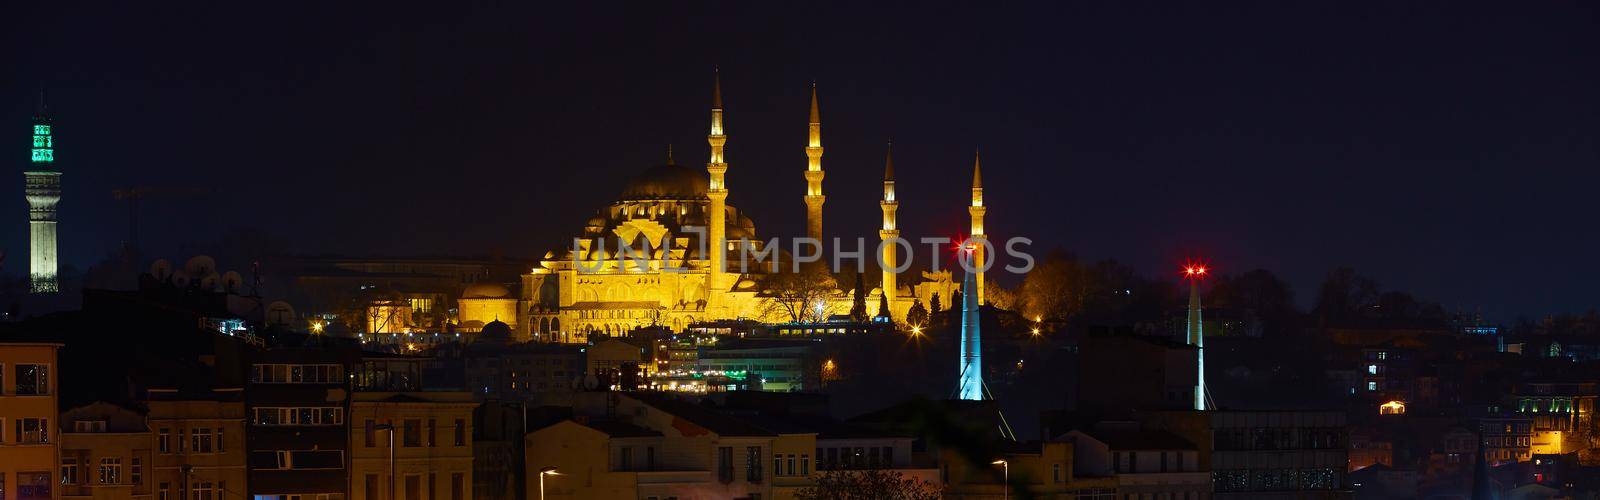 Suleymaniye Mosque night view, the largest in the city, Istanbul, Turkey by sarymsakov